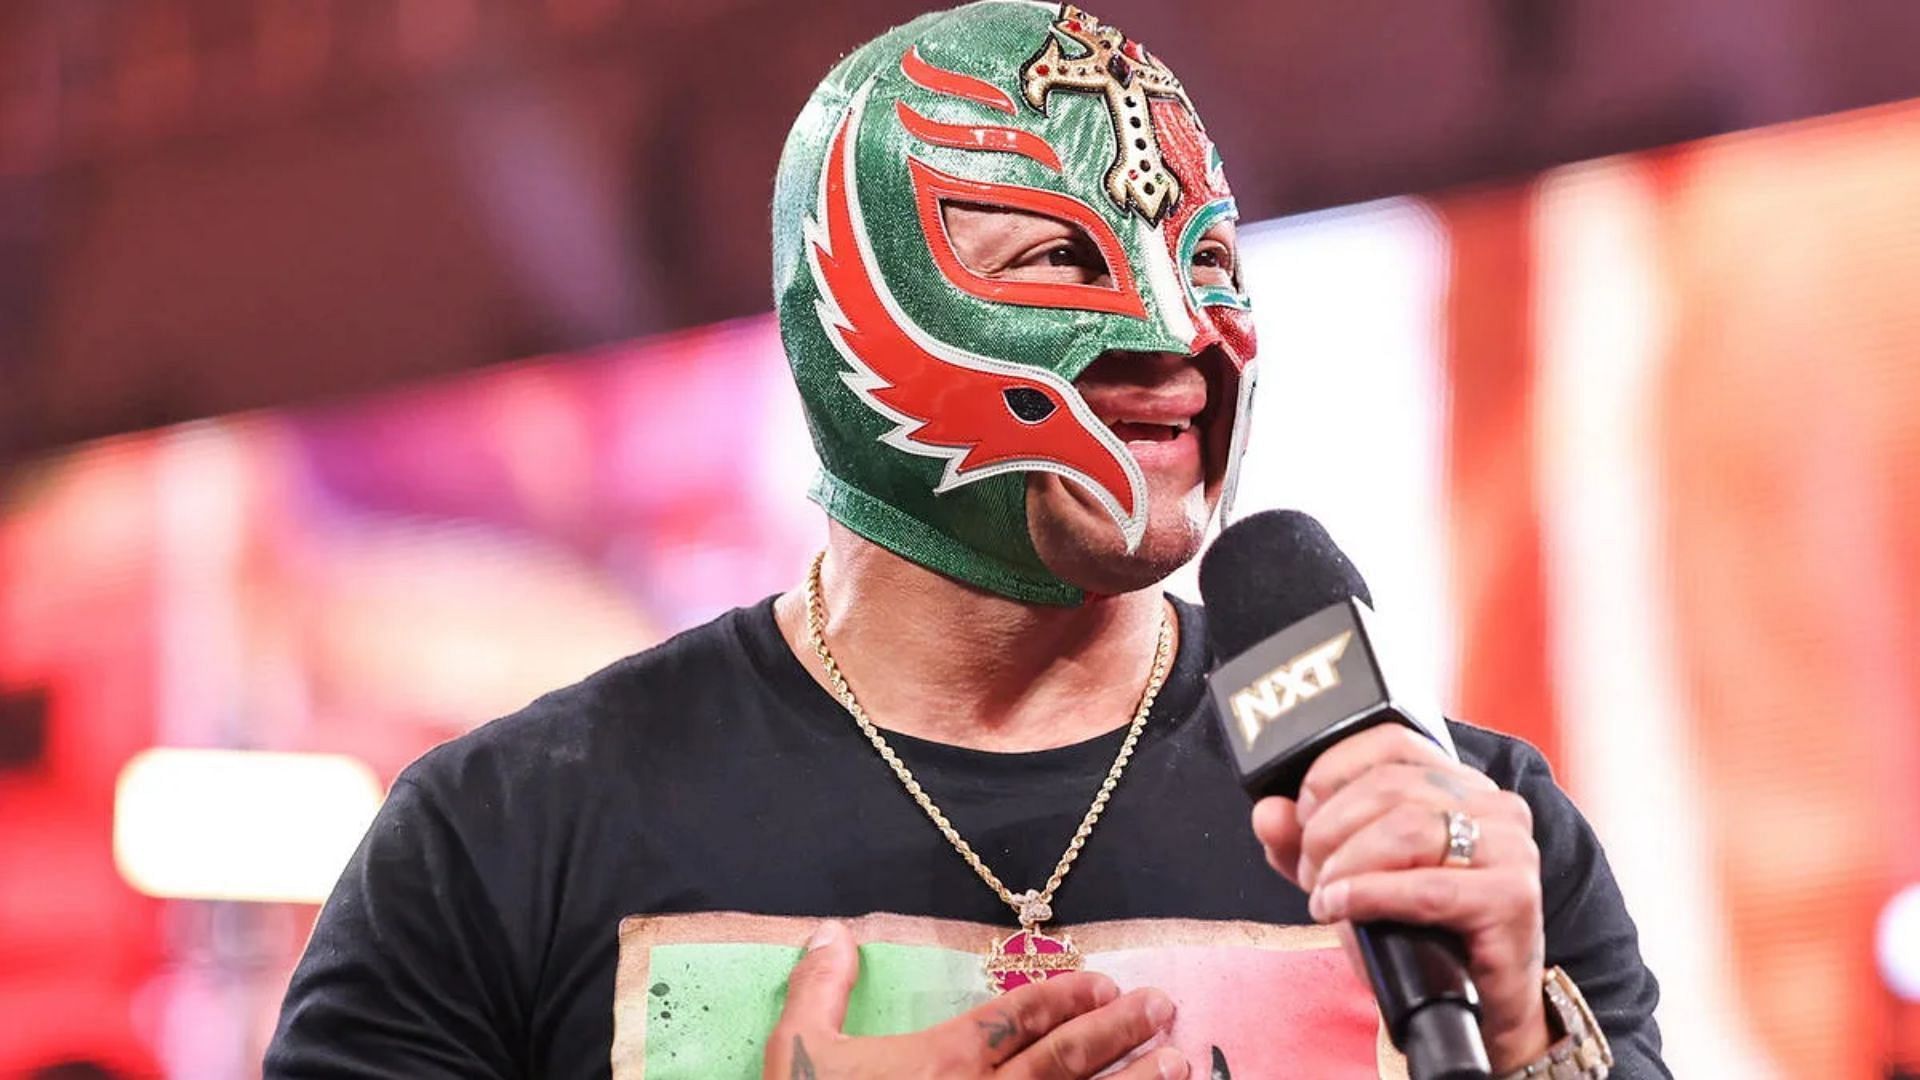 WWE Hall of Famer Rey Mysterio